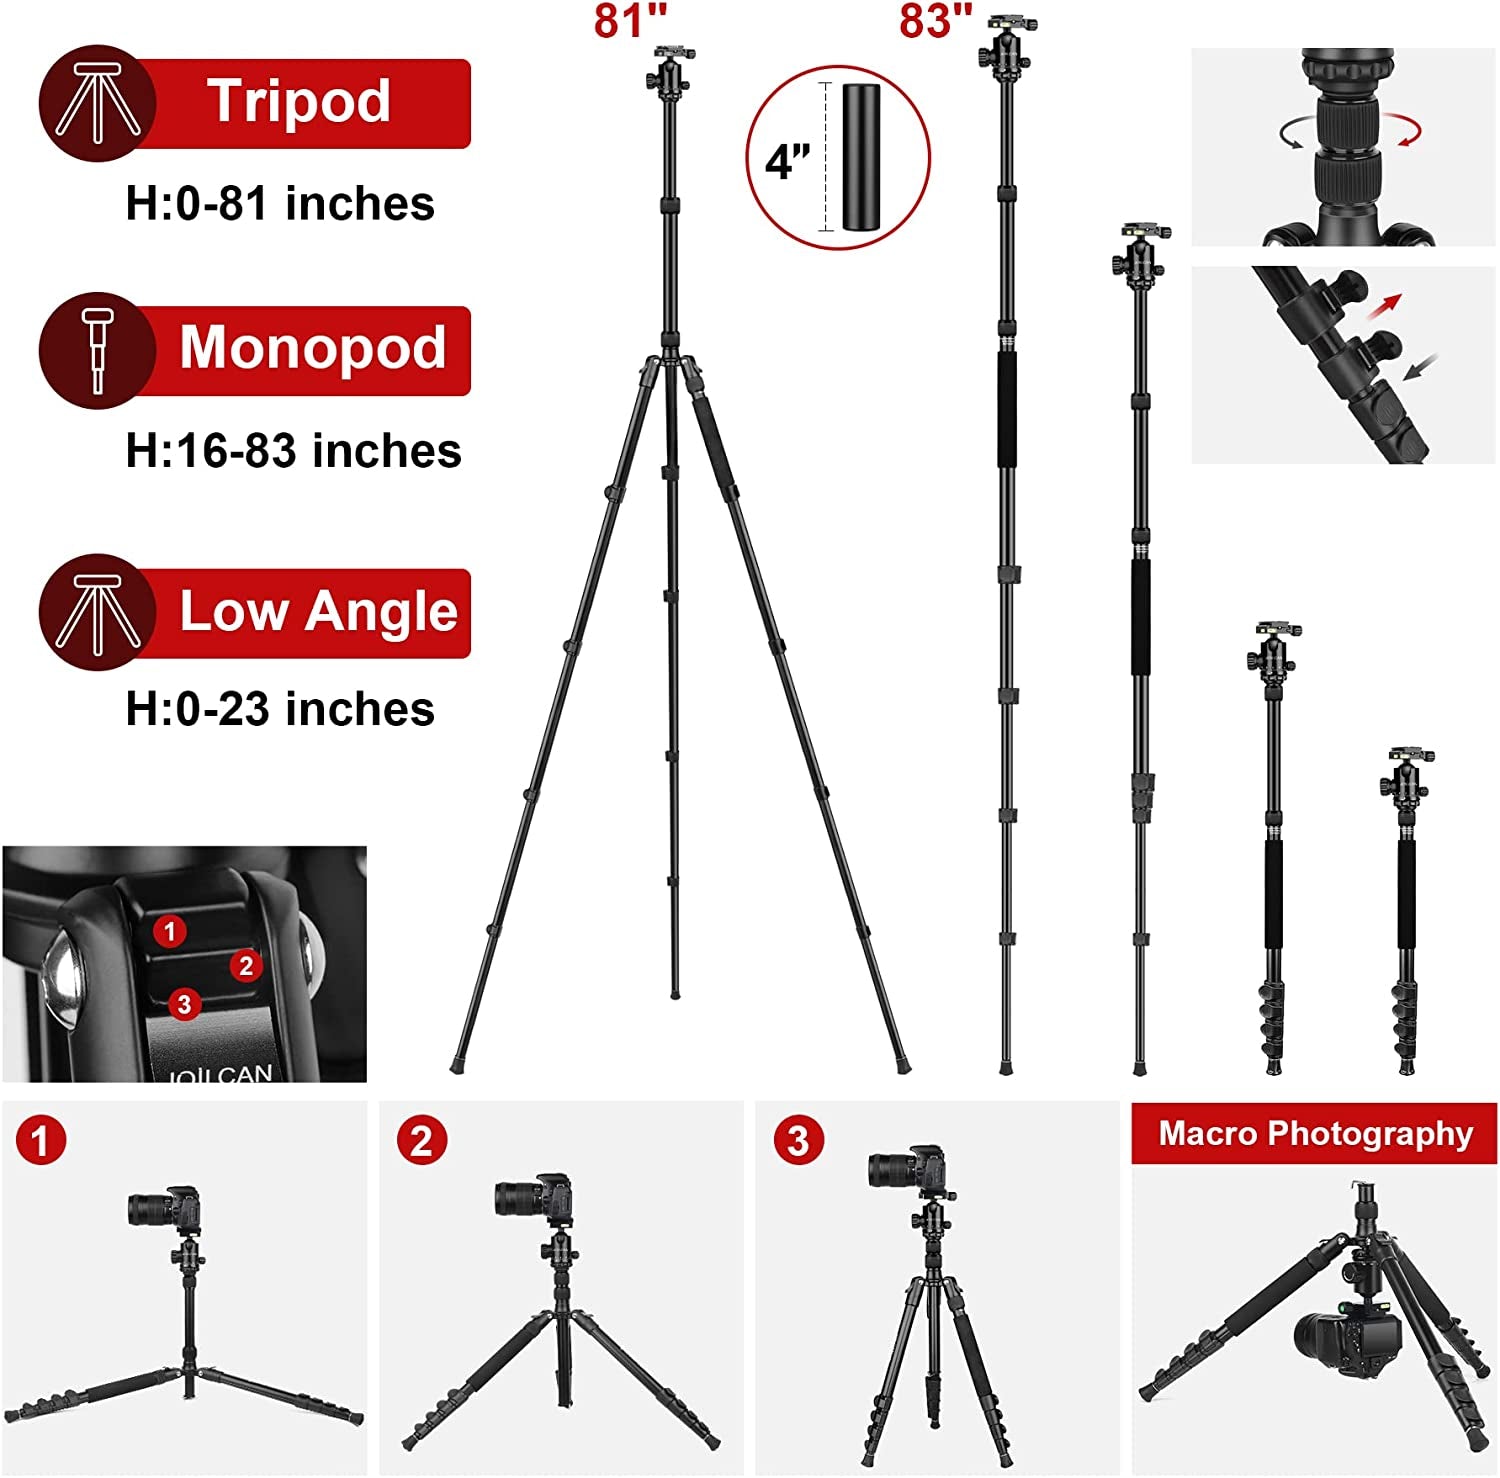 81" Camera Tripod Stand - Everyday-Sales.com